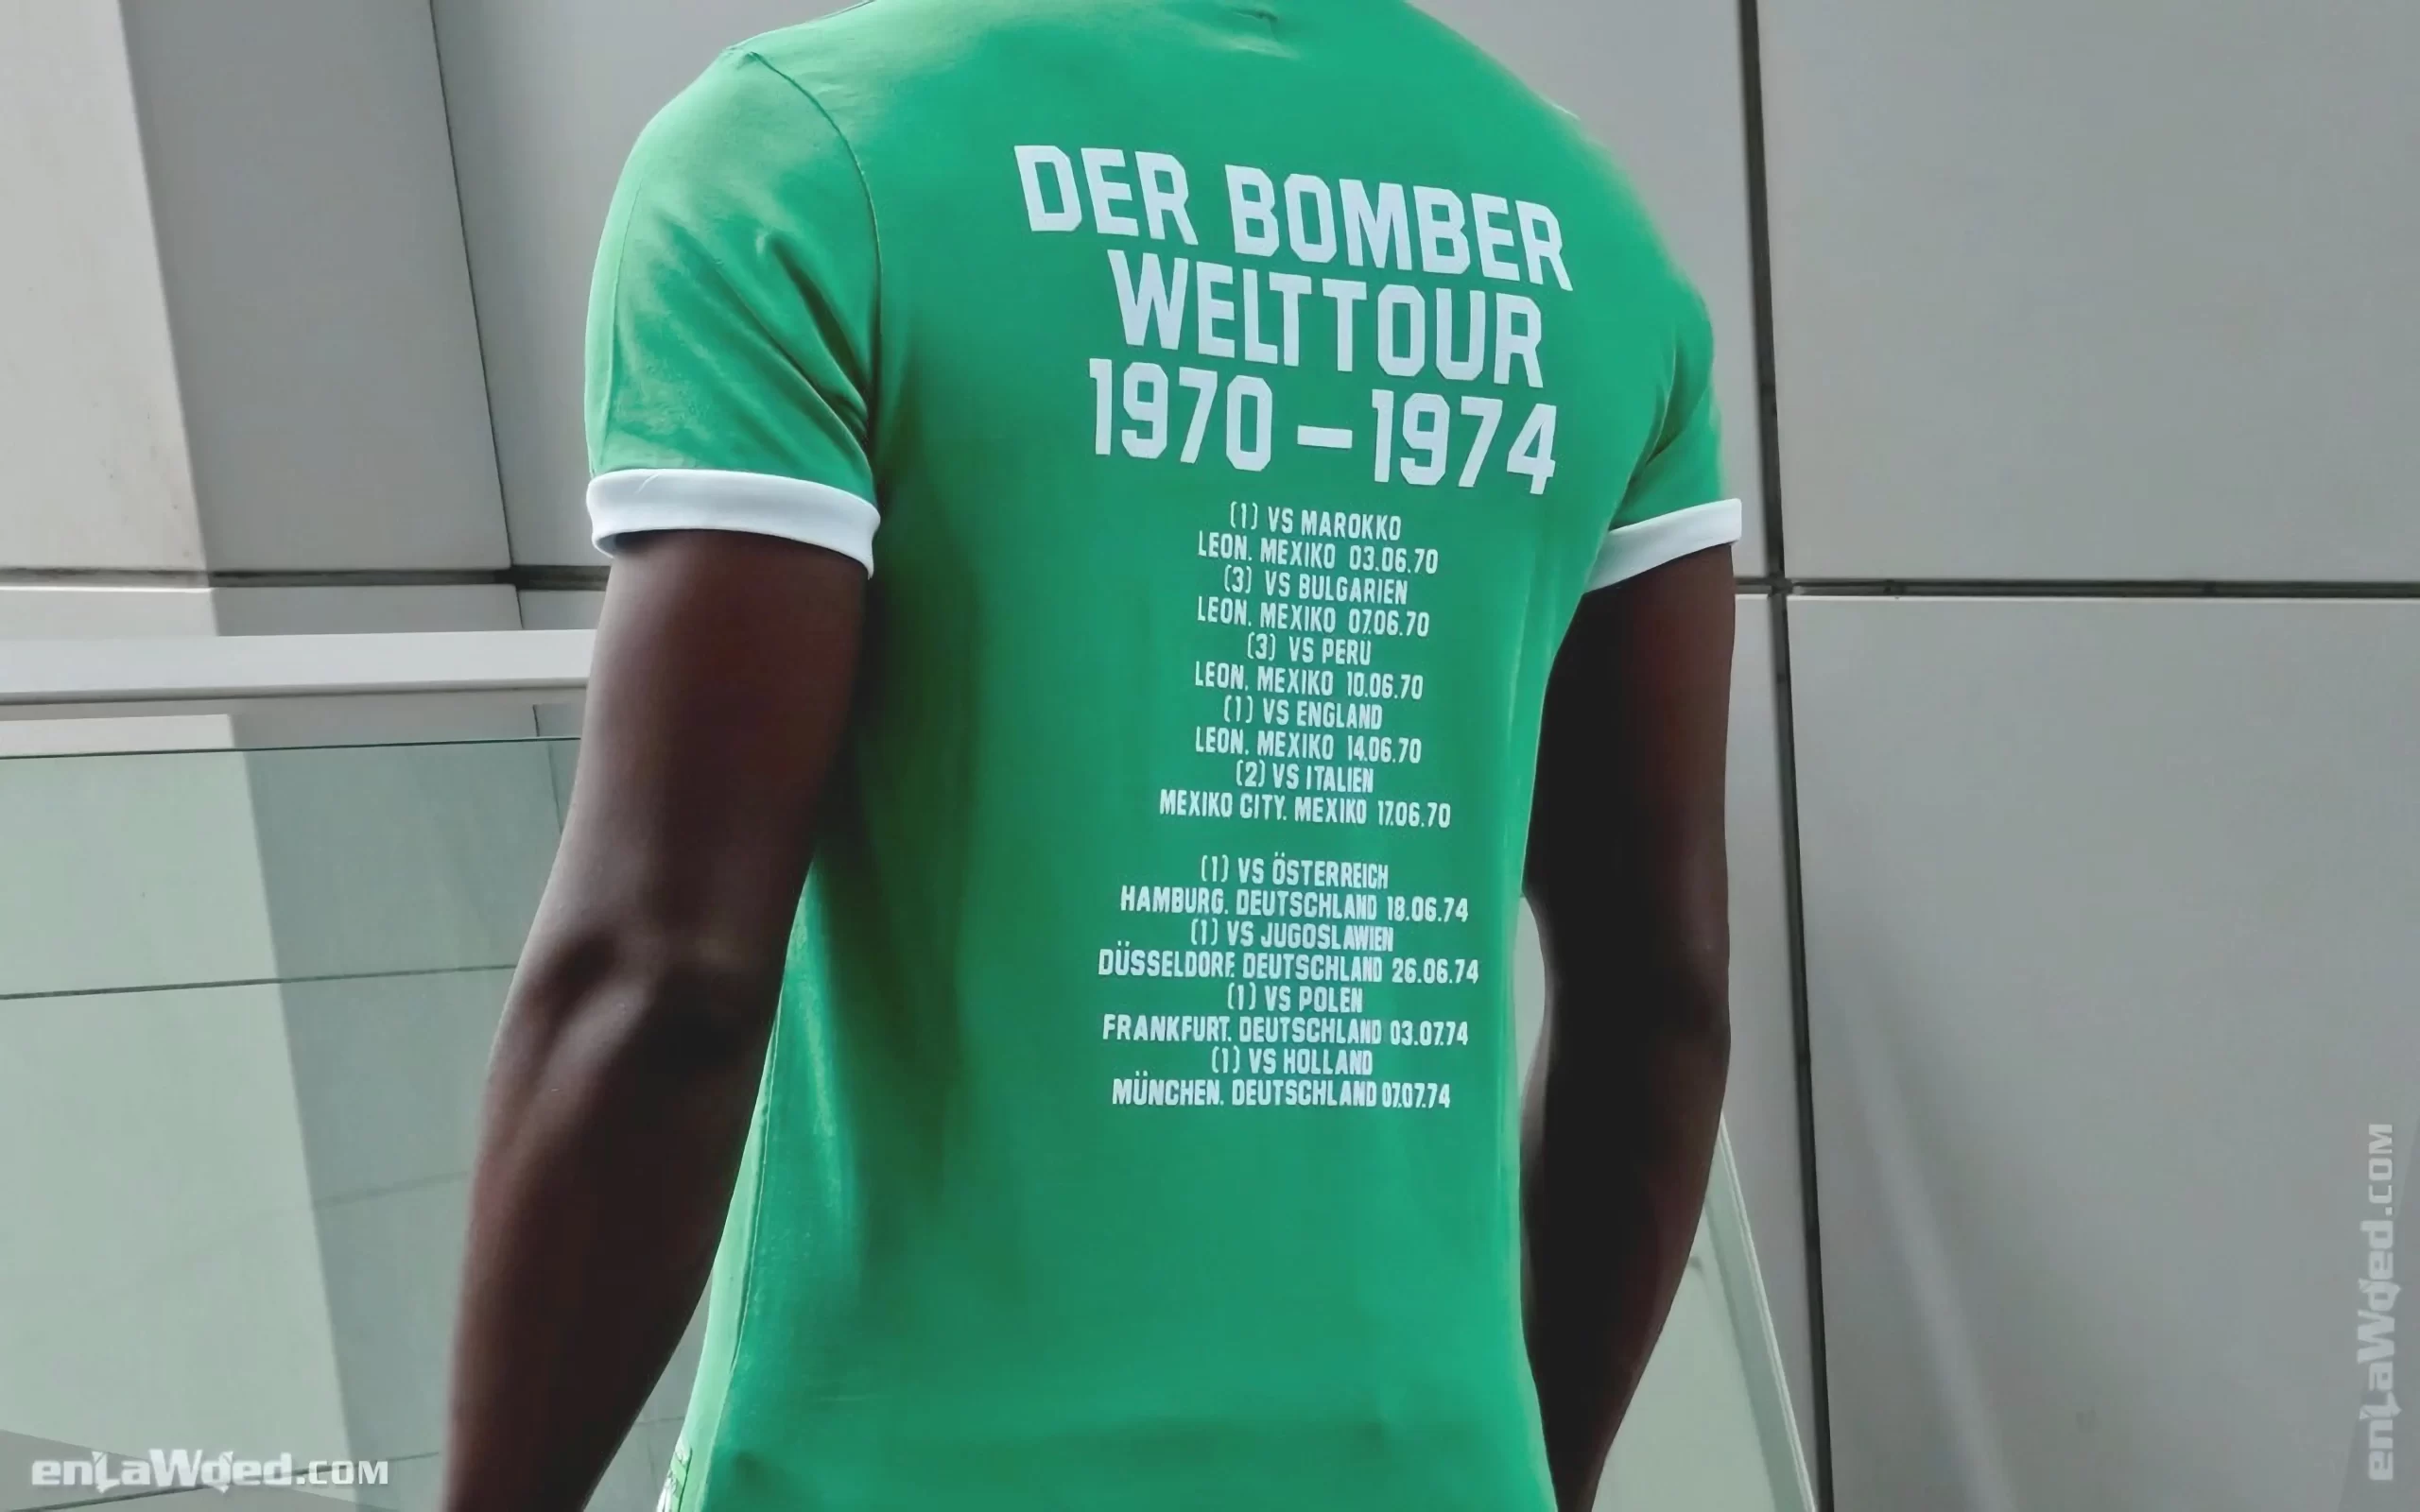 Men’s 2006 Der Bomber ’70 T-shirt by Adidas Originals: Energetic (EnLawded.com file #lmc511cdkgyfagh63cq)